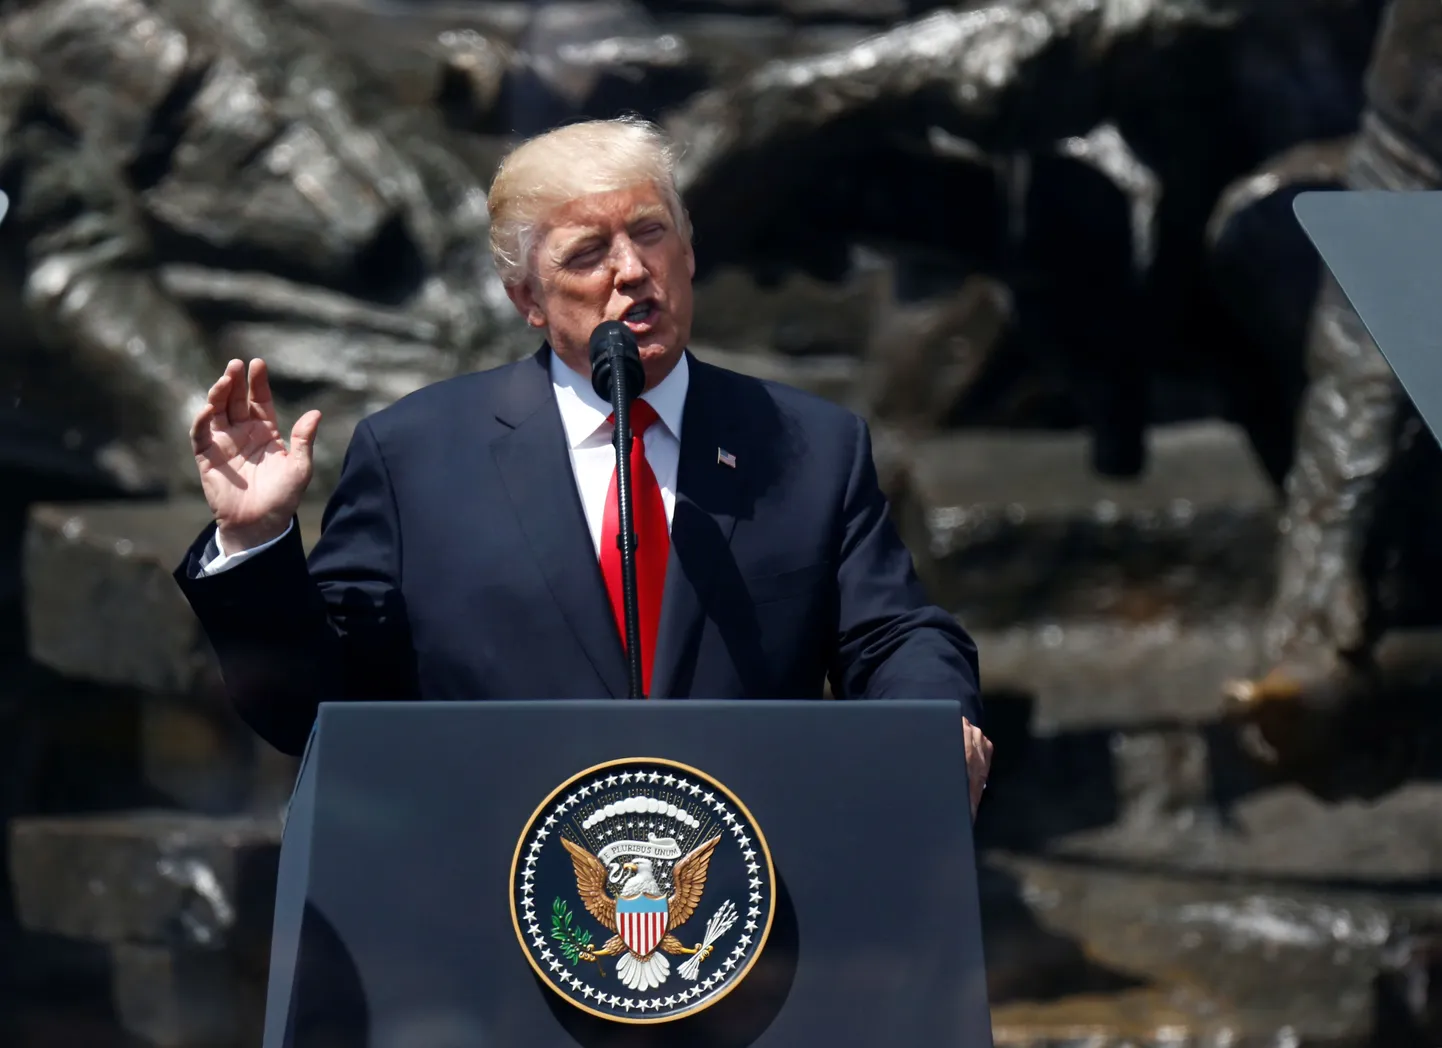 USA president Donald Trump täna Varssavis  Krasinski väljakul kõnet pidamas.